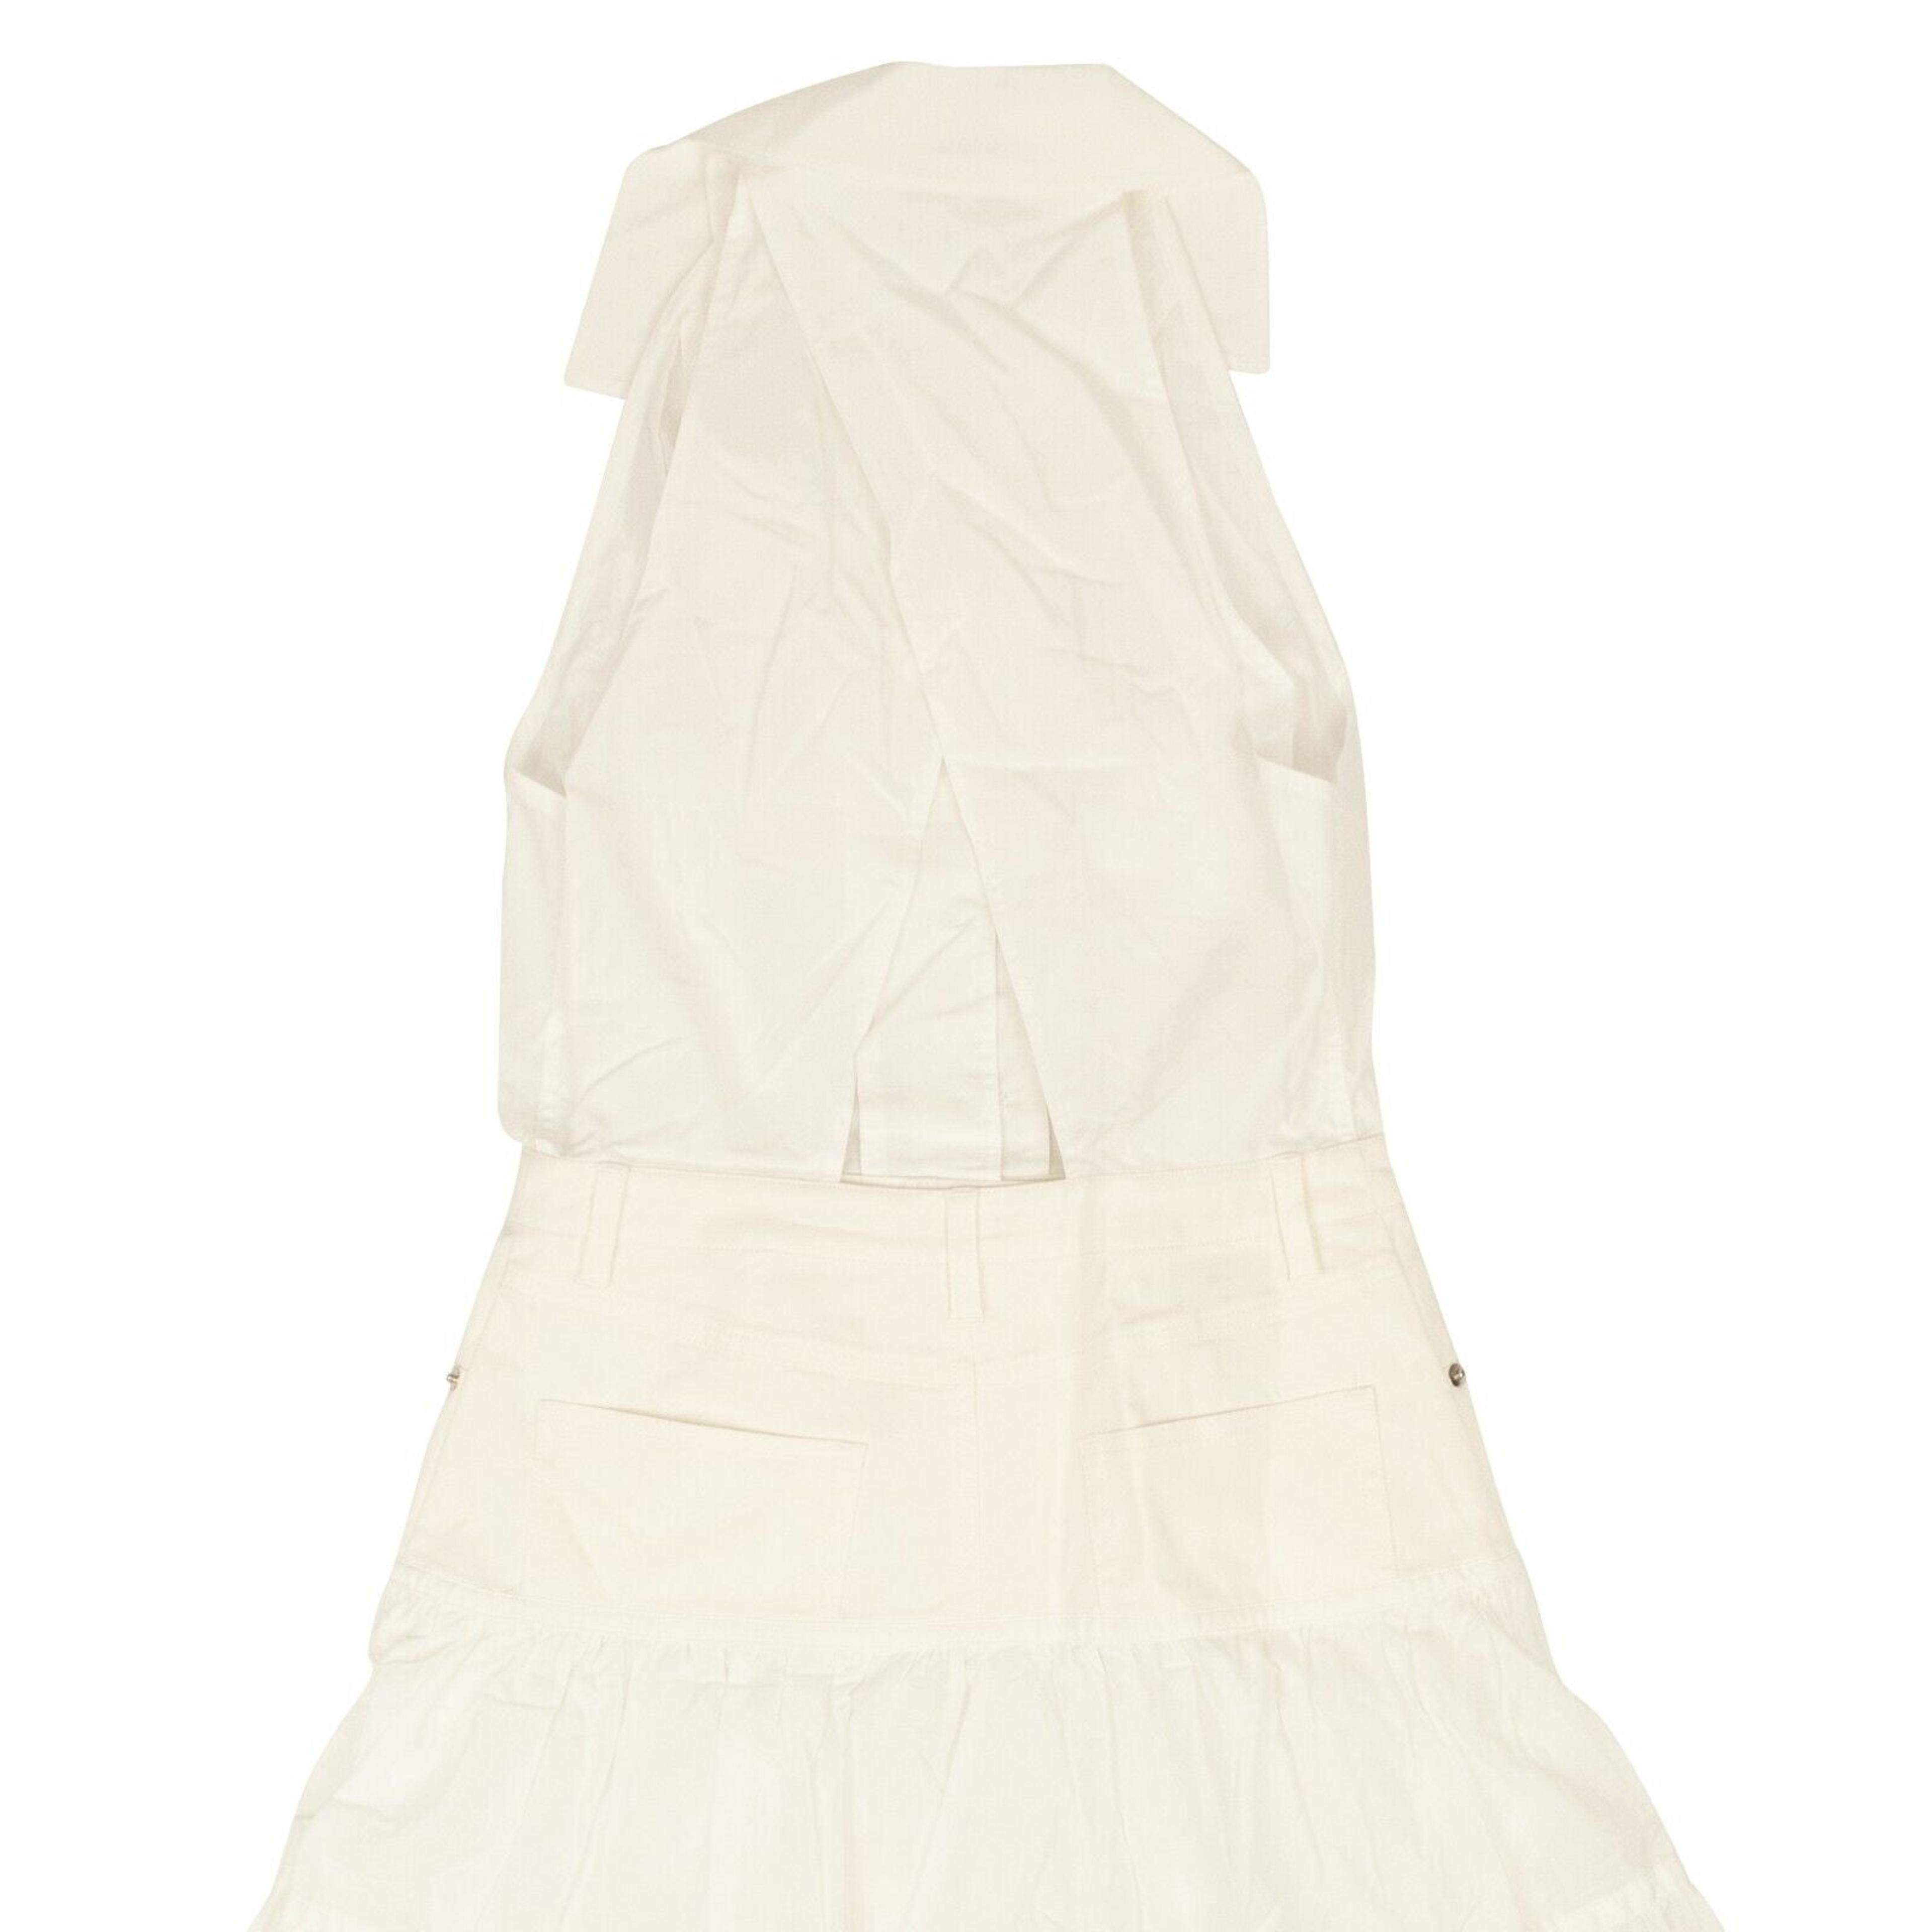 Alternate View 3 of White Cotton Tiered Ruffle Dress